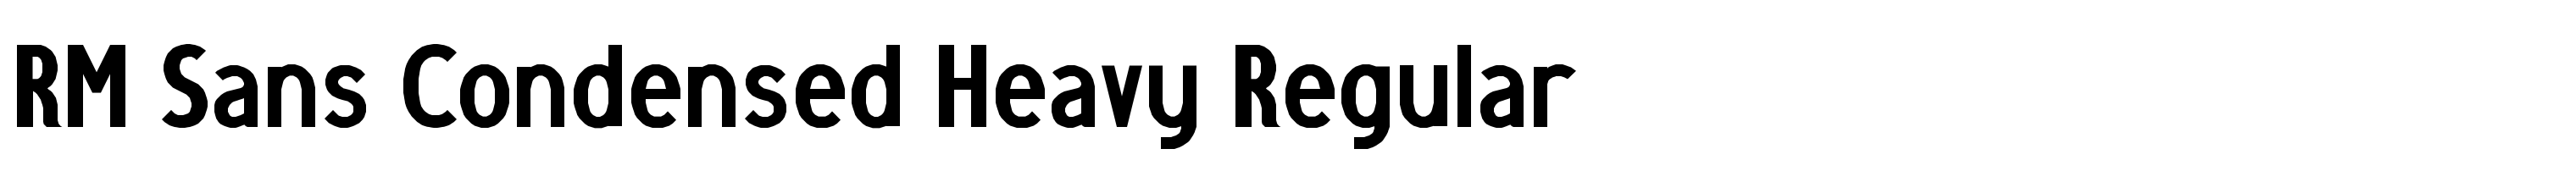 RM Sans Condensed Heavy Regular